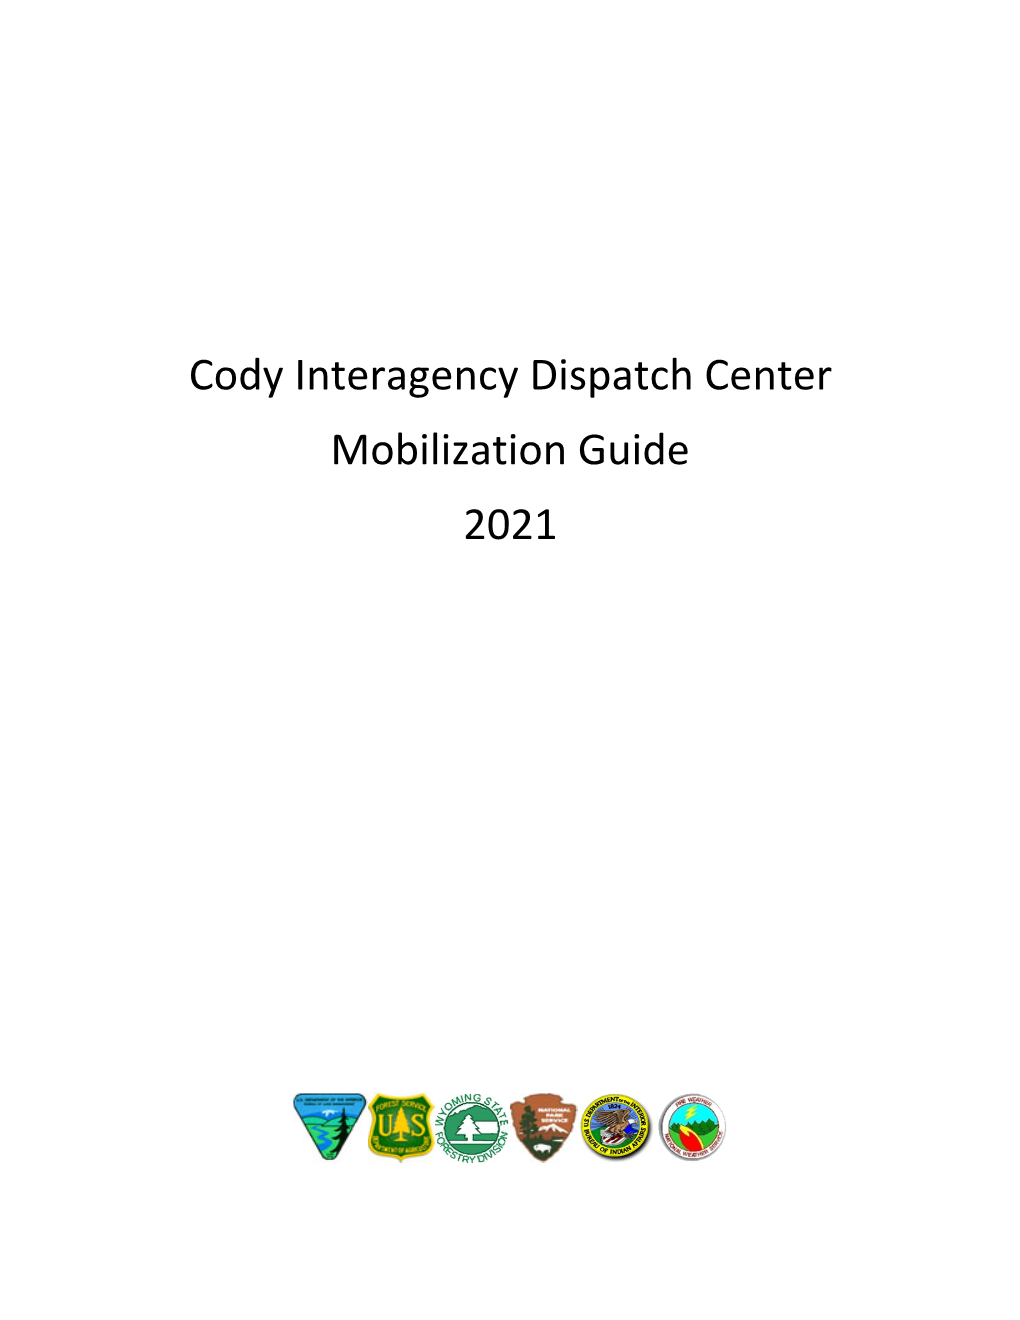 Cody Interagency Dispatch Center Mobilization Guide 2021